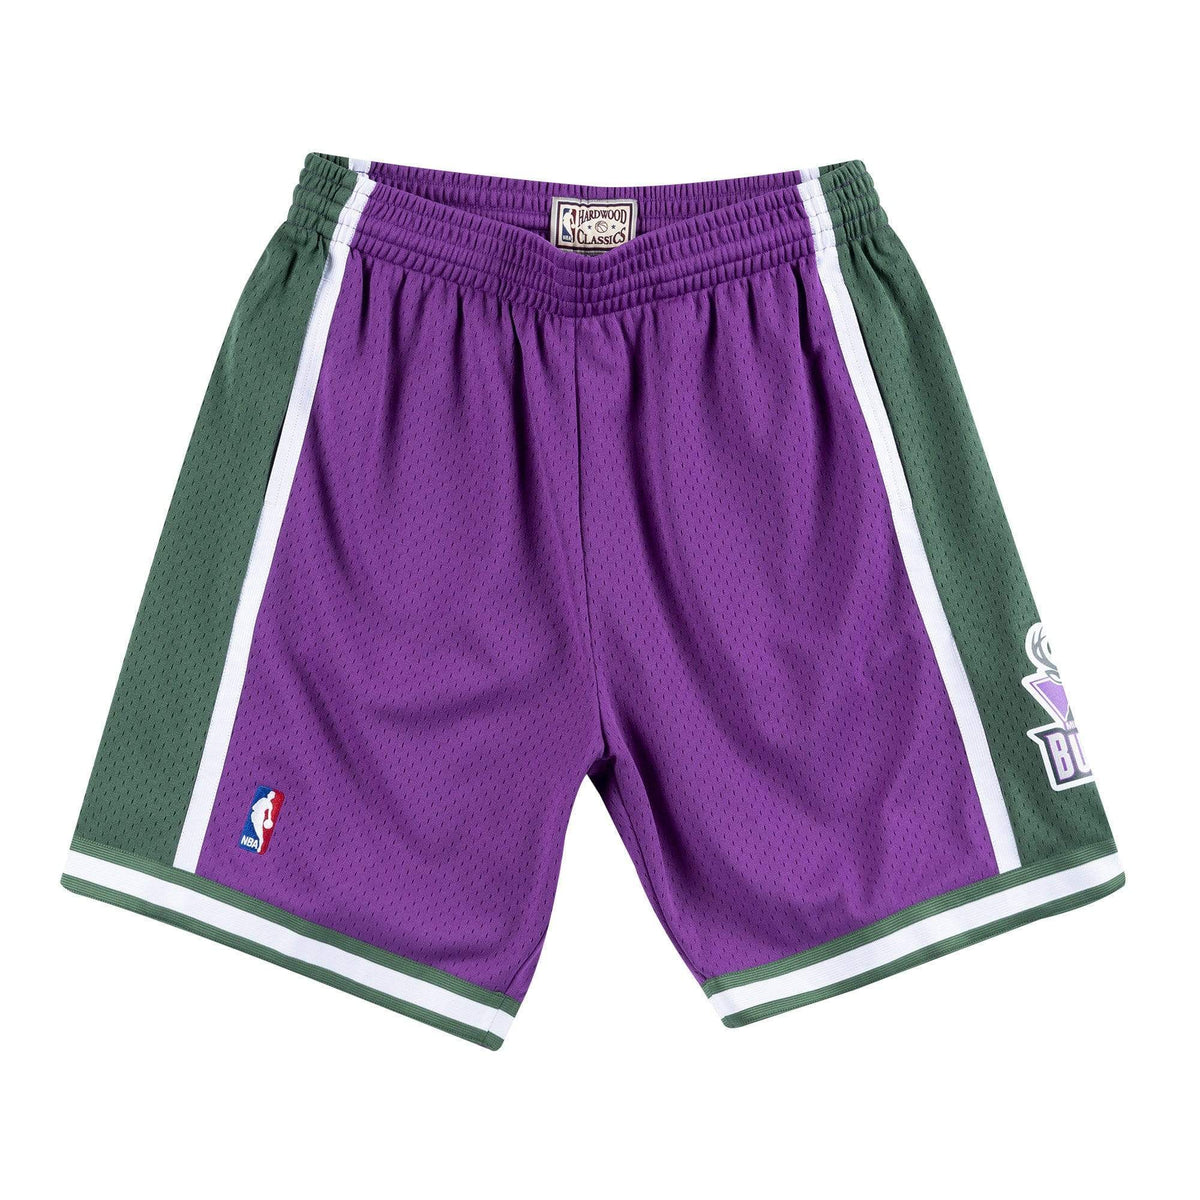 Mitchell & Ness Men's Los Angeles Lakers Hardwood Classics White Out  Swingman Shorts